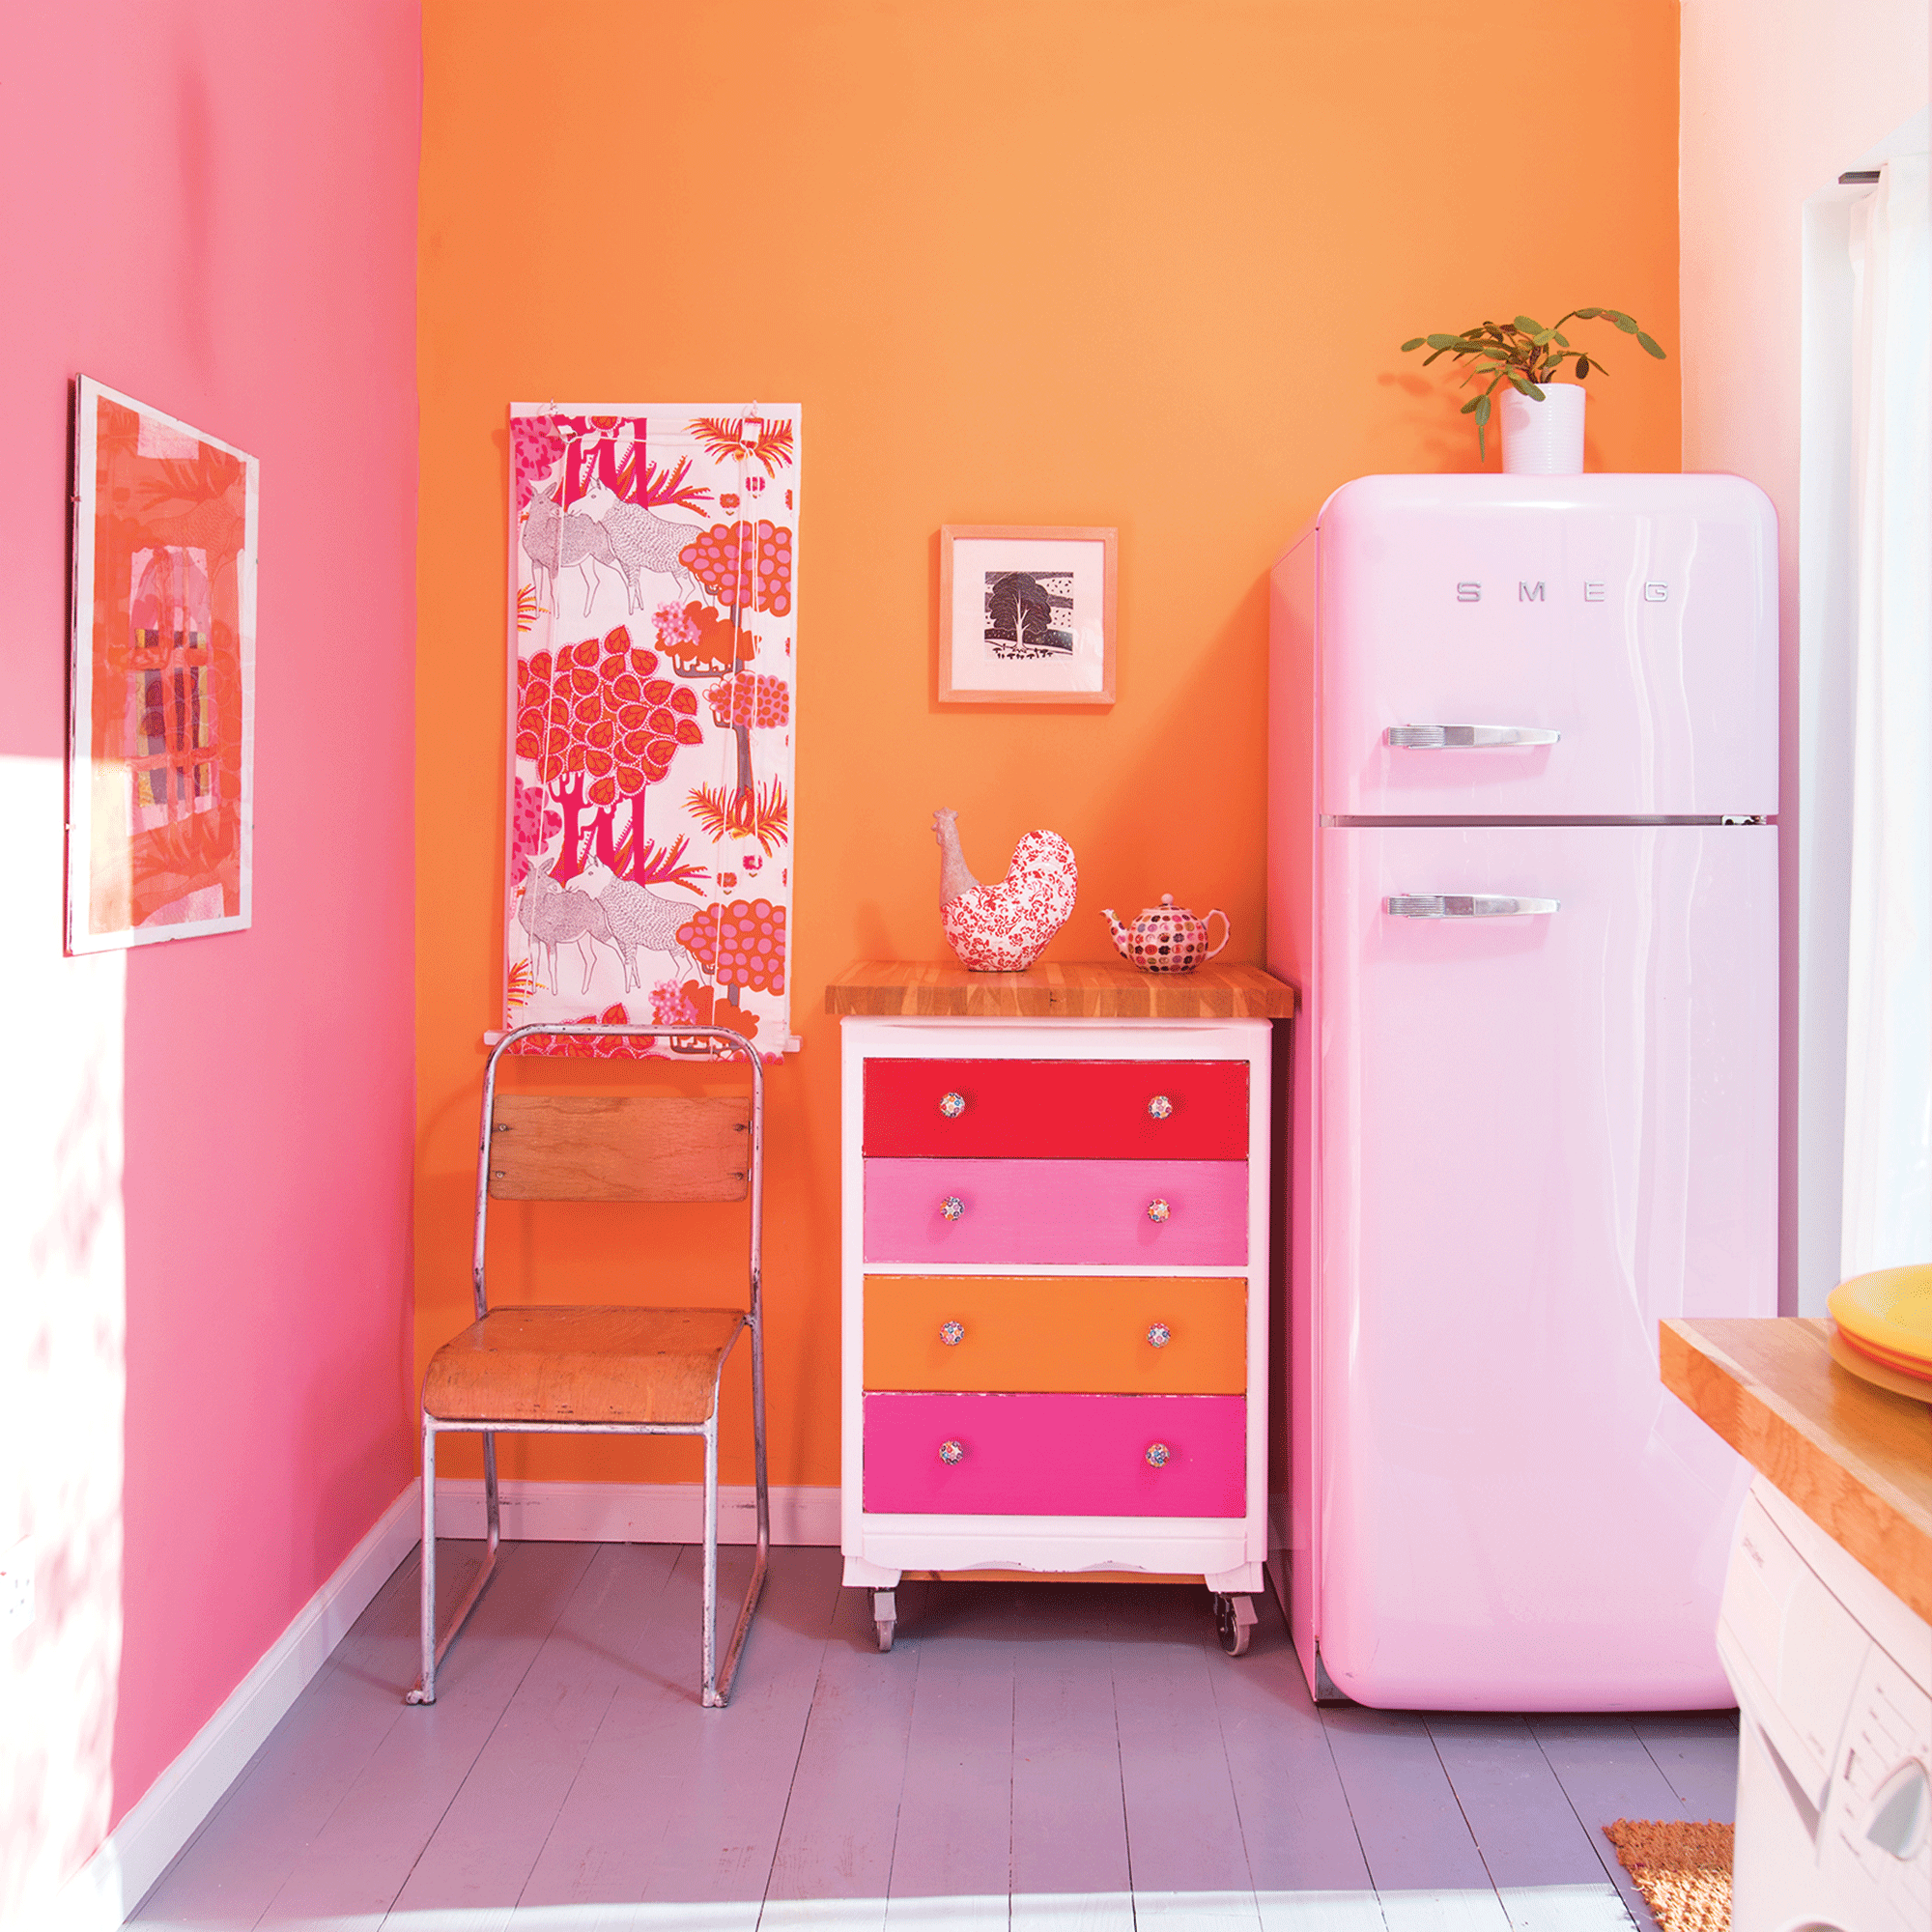 Pink and orange kitchen with pink smeg fridge